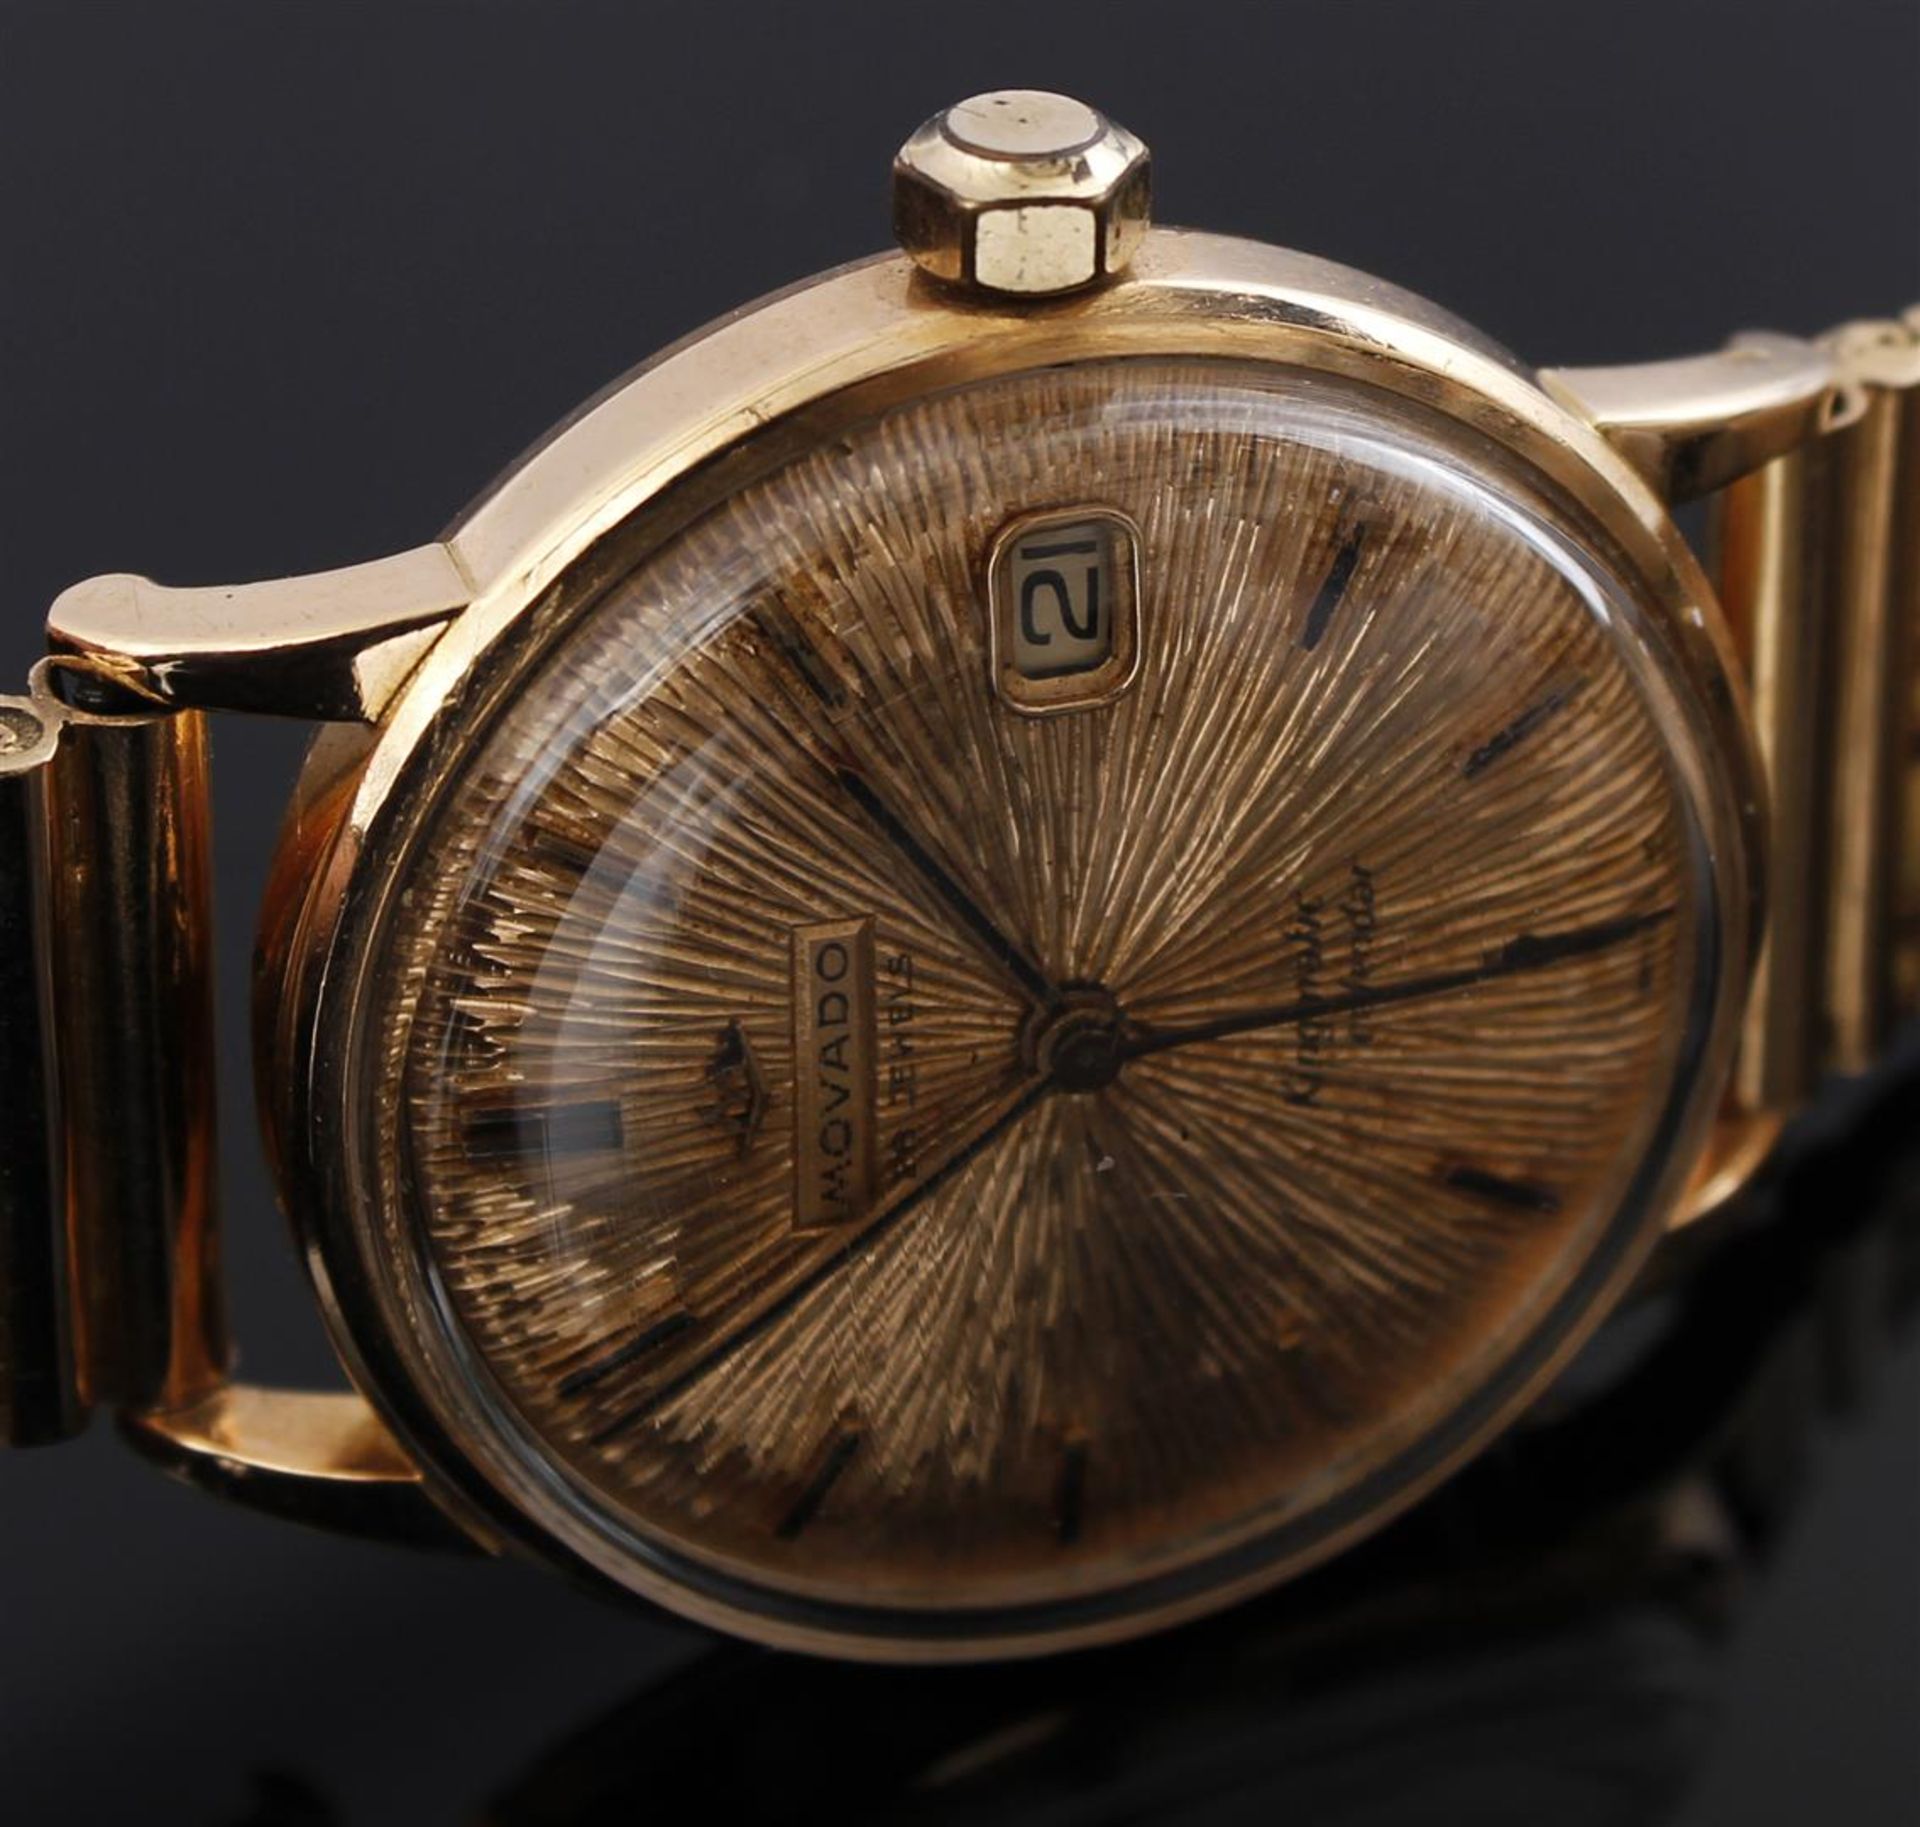 Movado Kingmatic Kalendar wristwatch - Image 3 of 3